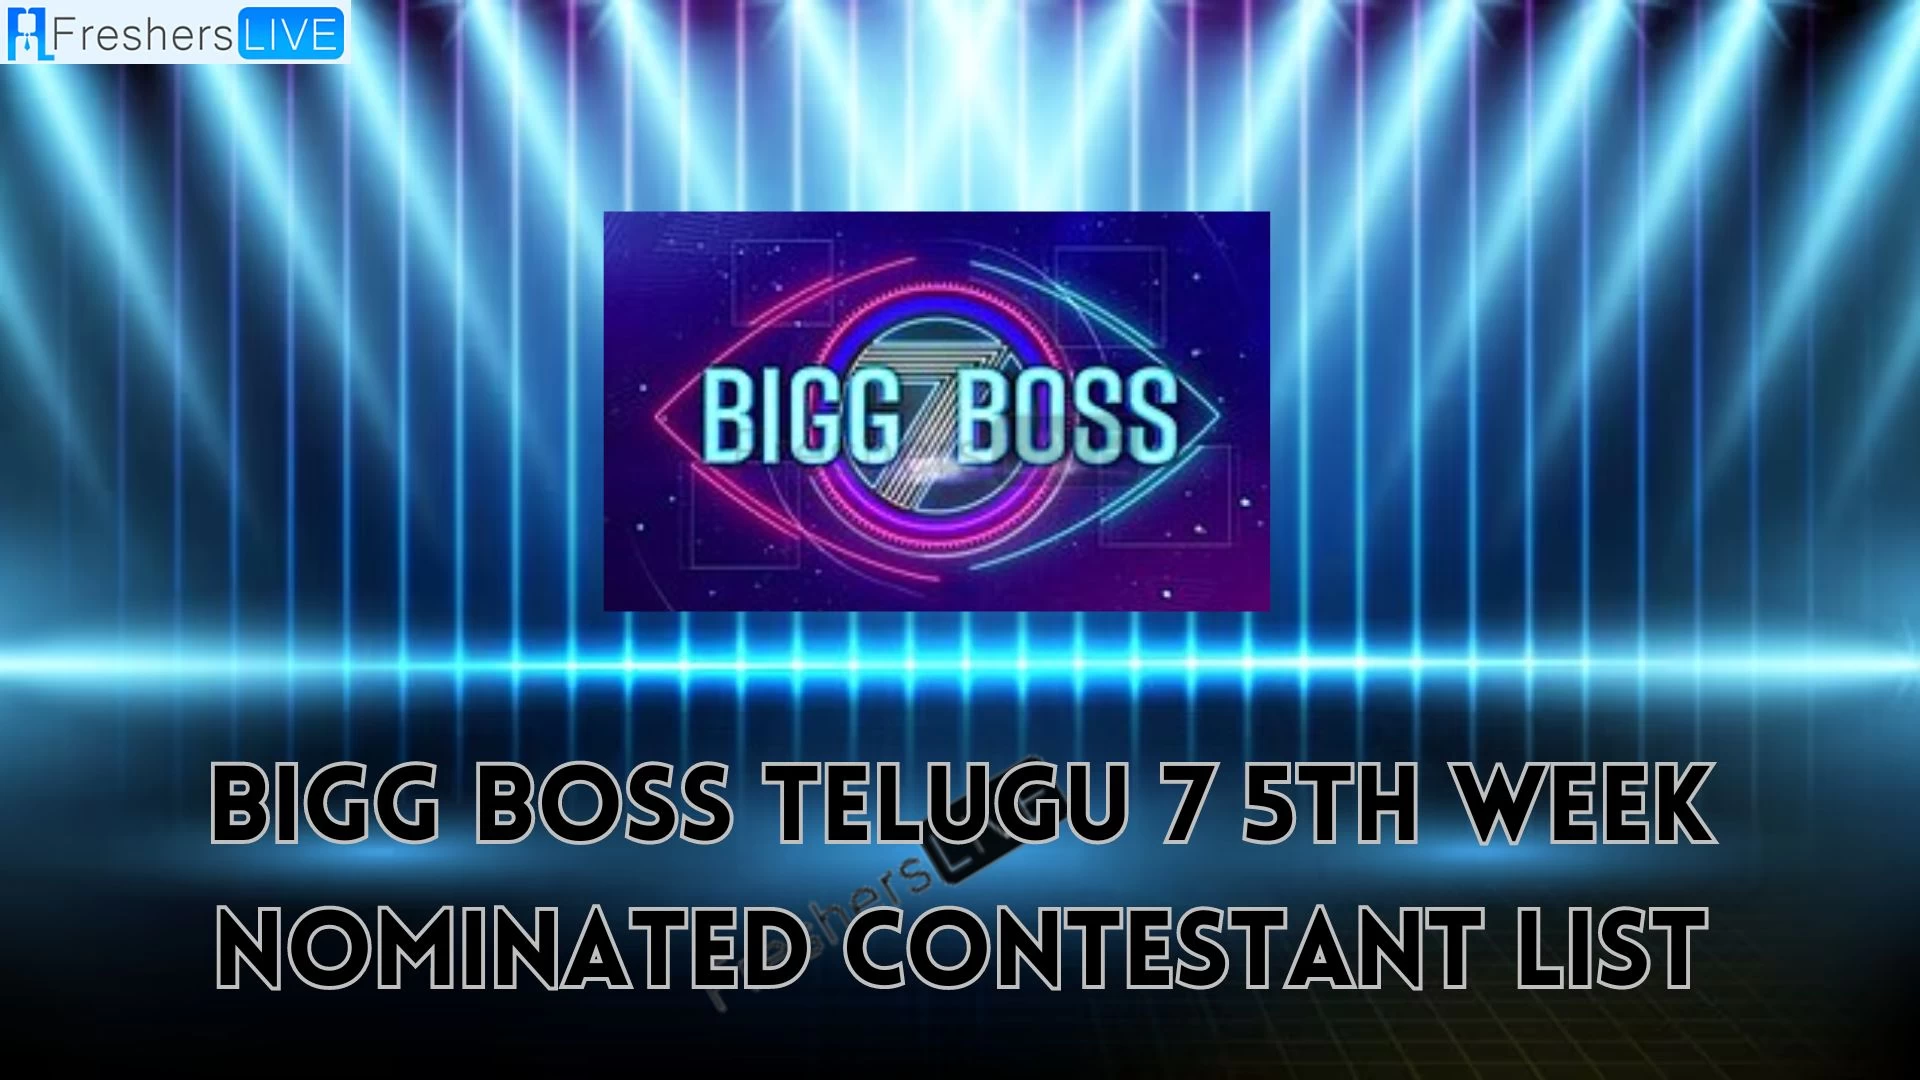 Bigg Boss Telugu 7 5th Week Nominated Contestant List, How to Vote for Bigg Boss Telugu 7?